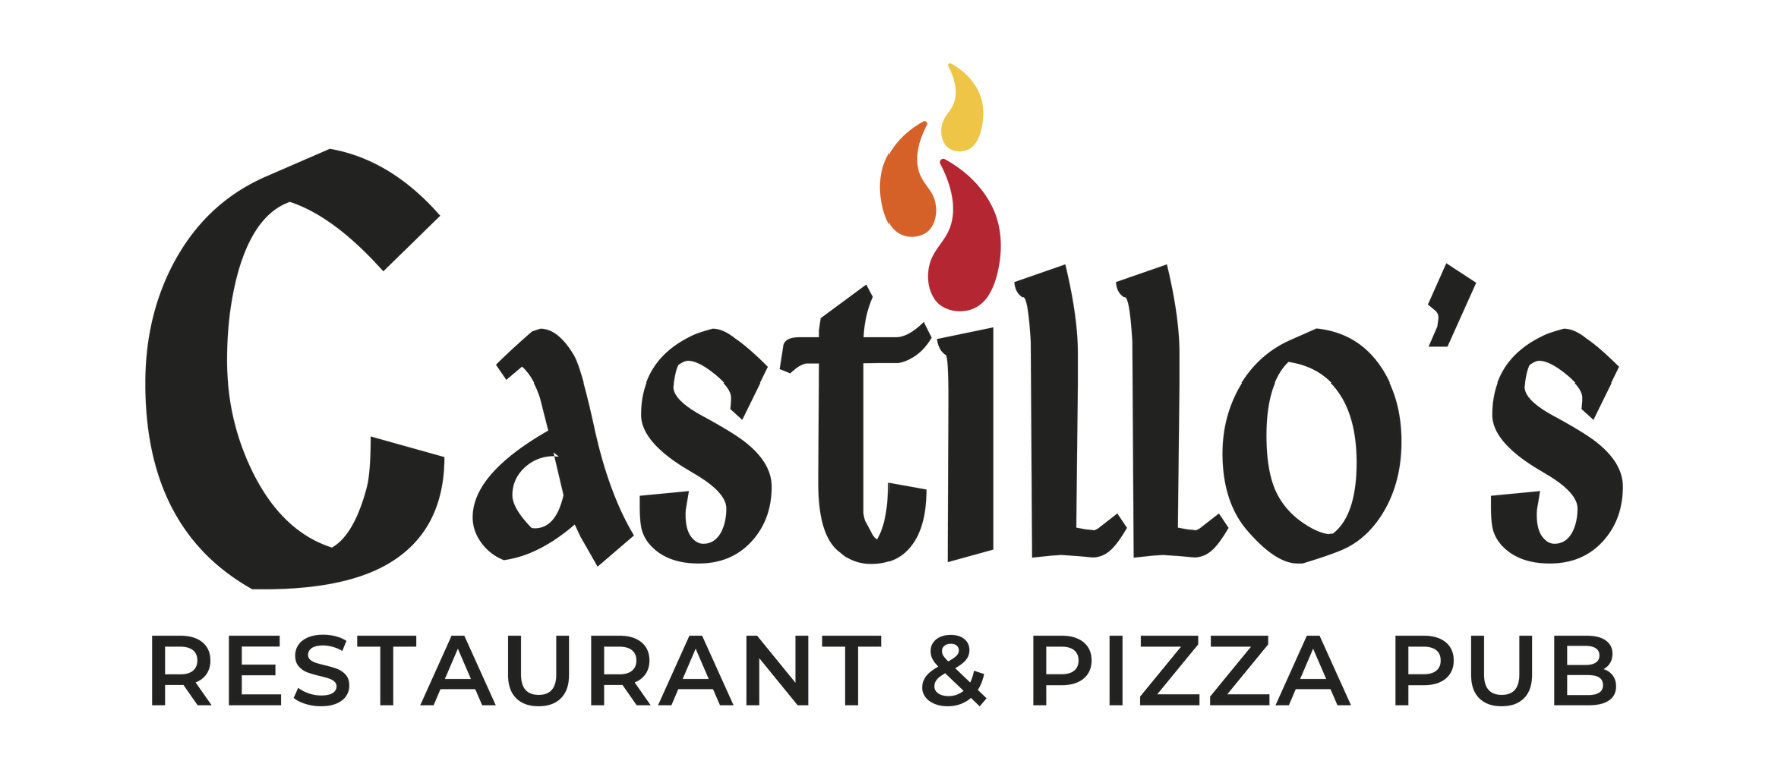 Castillo's restaurant & pizza pub.